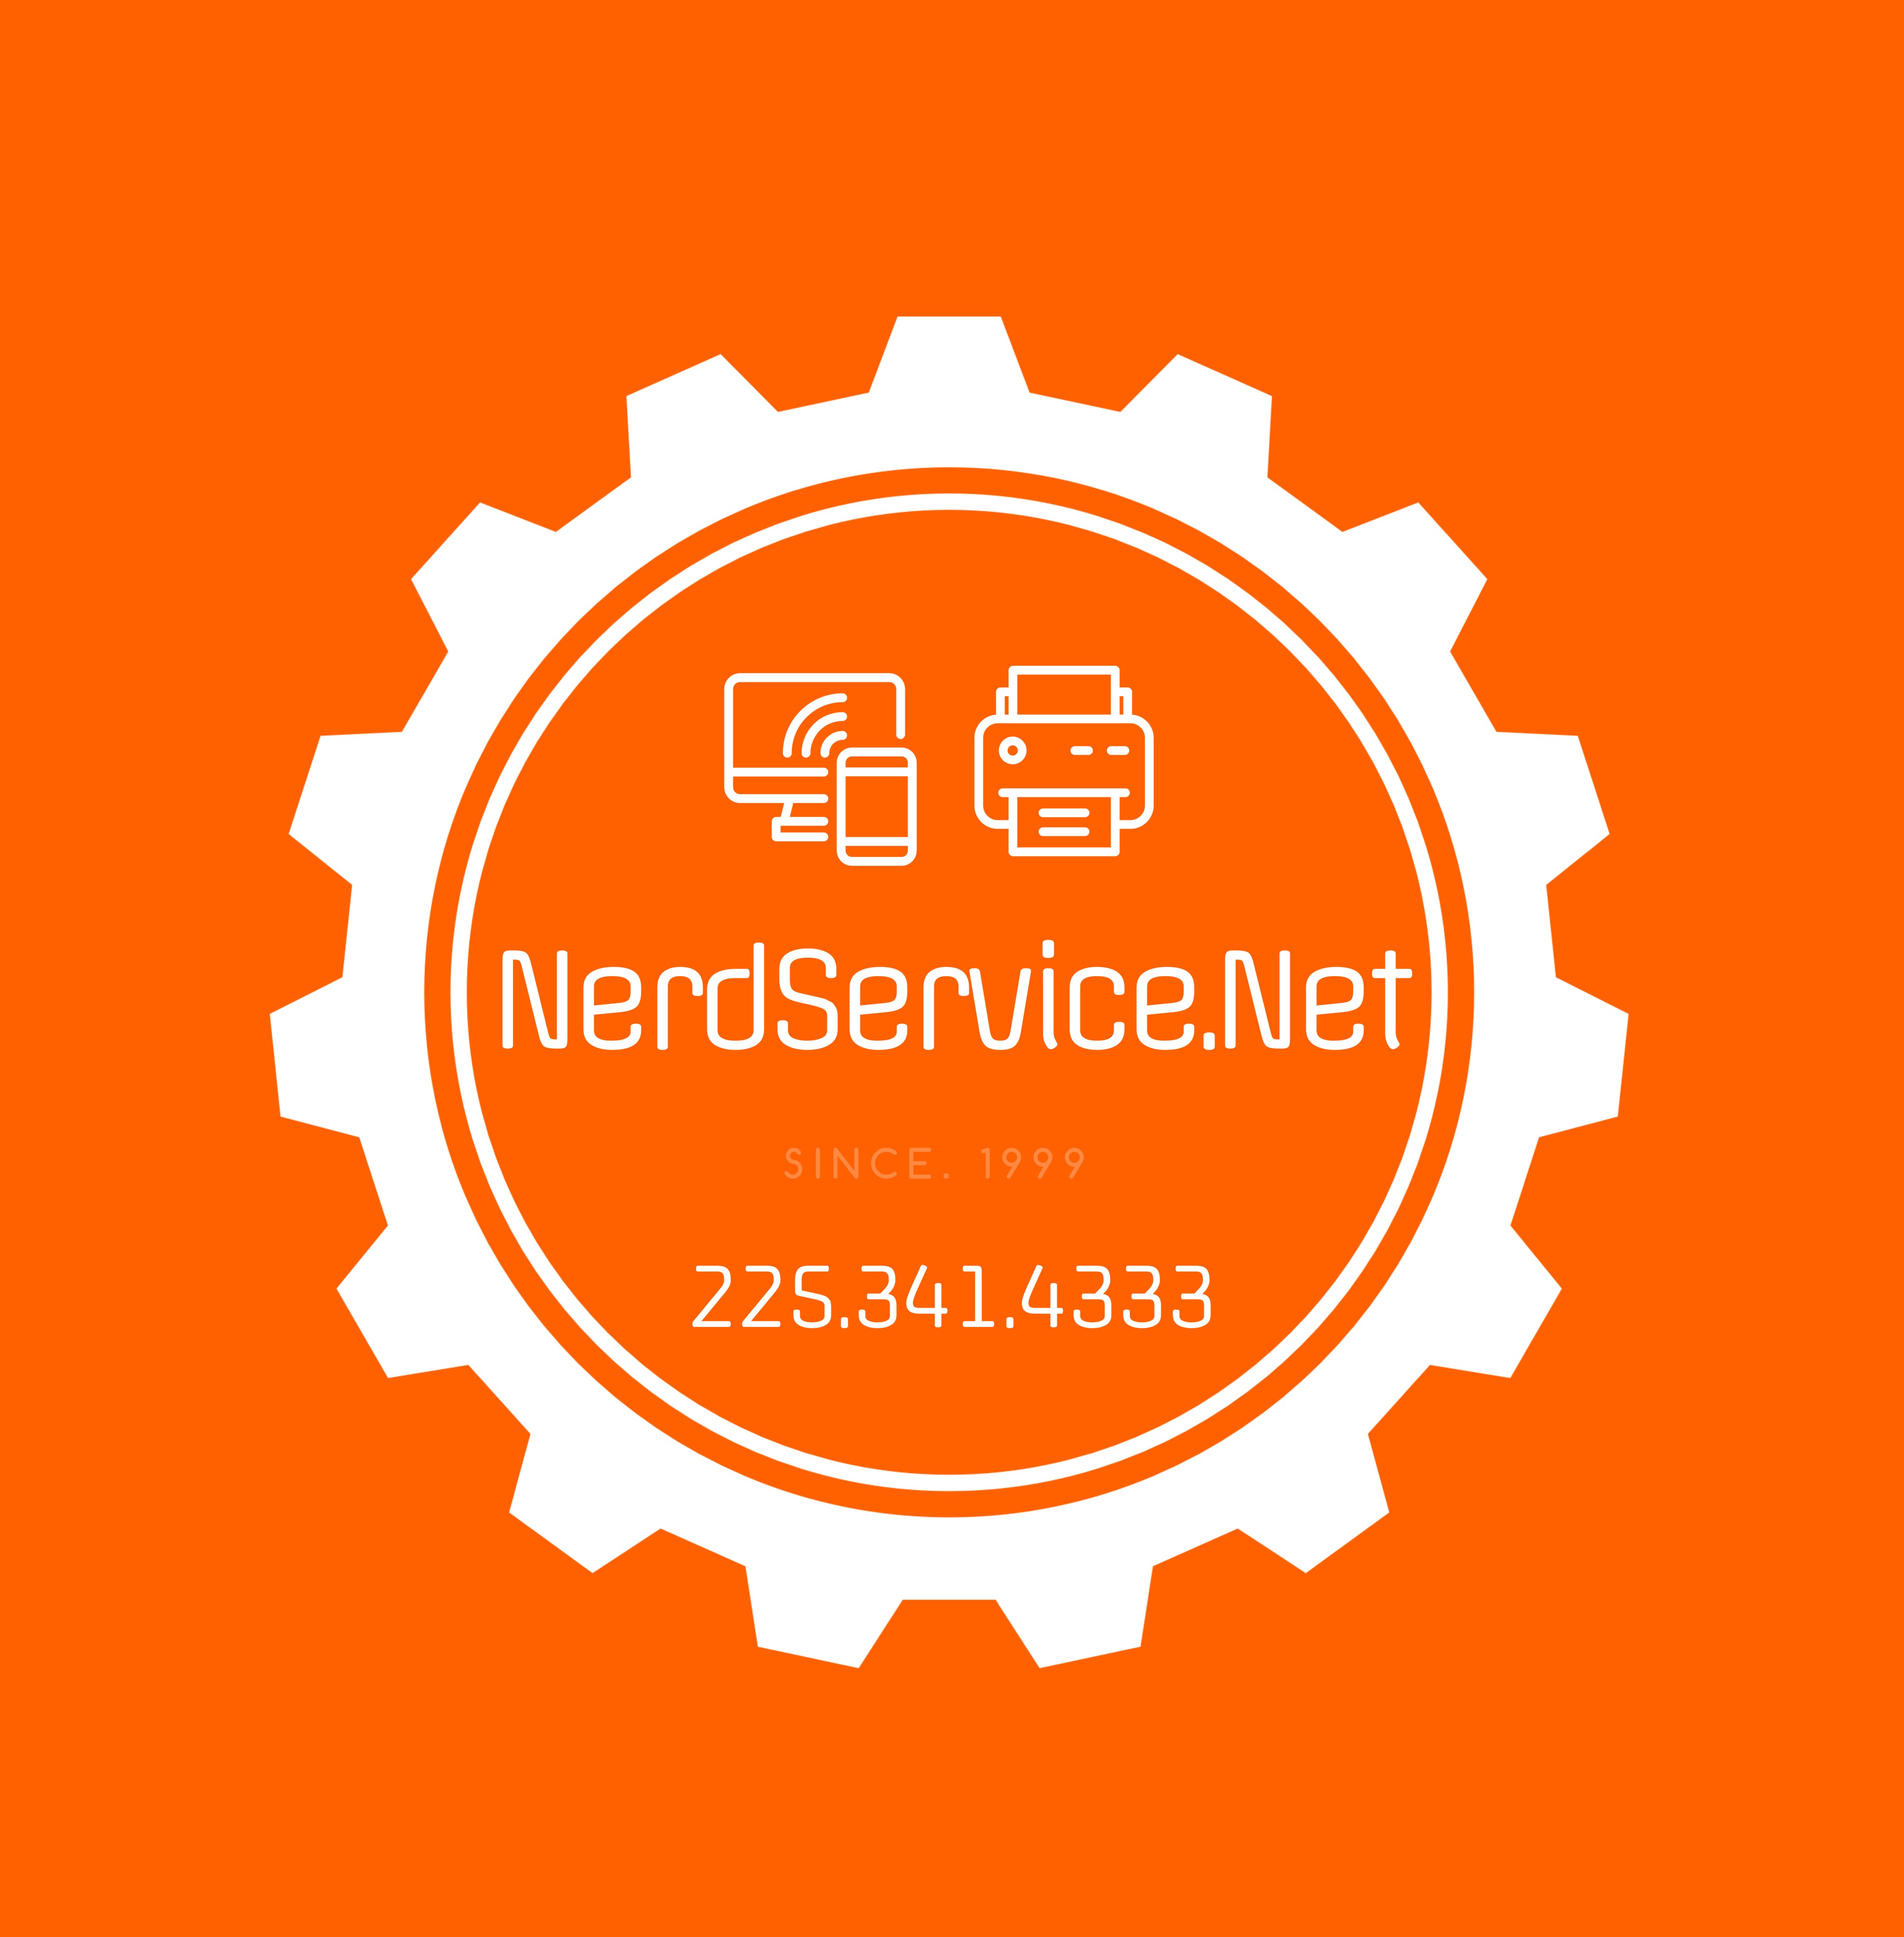 NerdService.Net Online Store